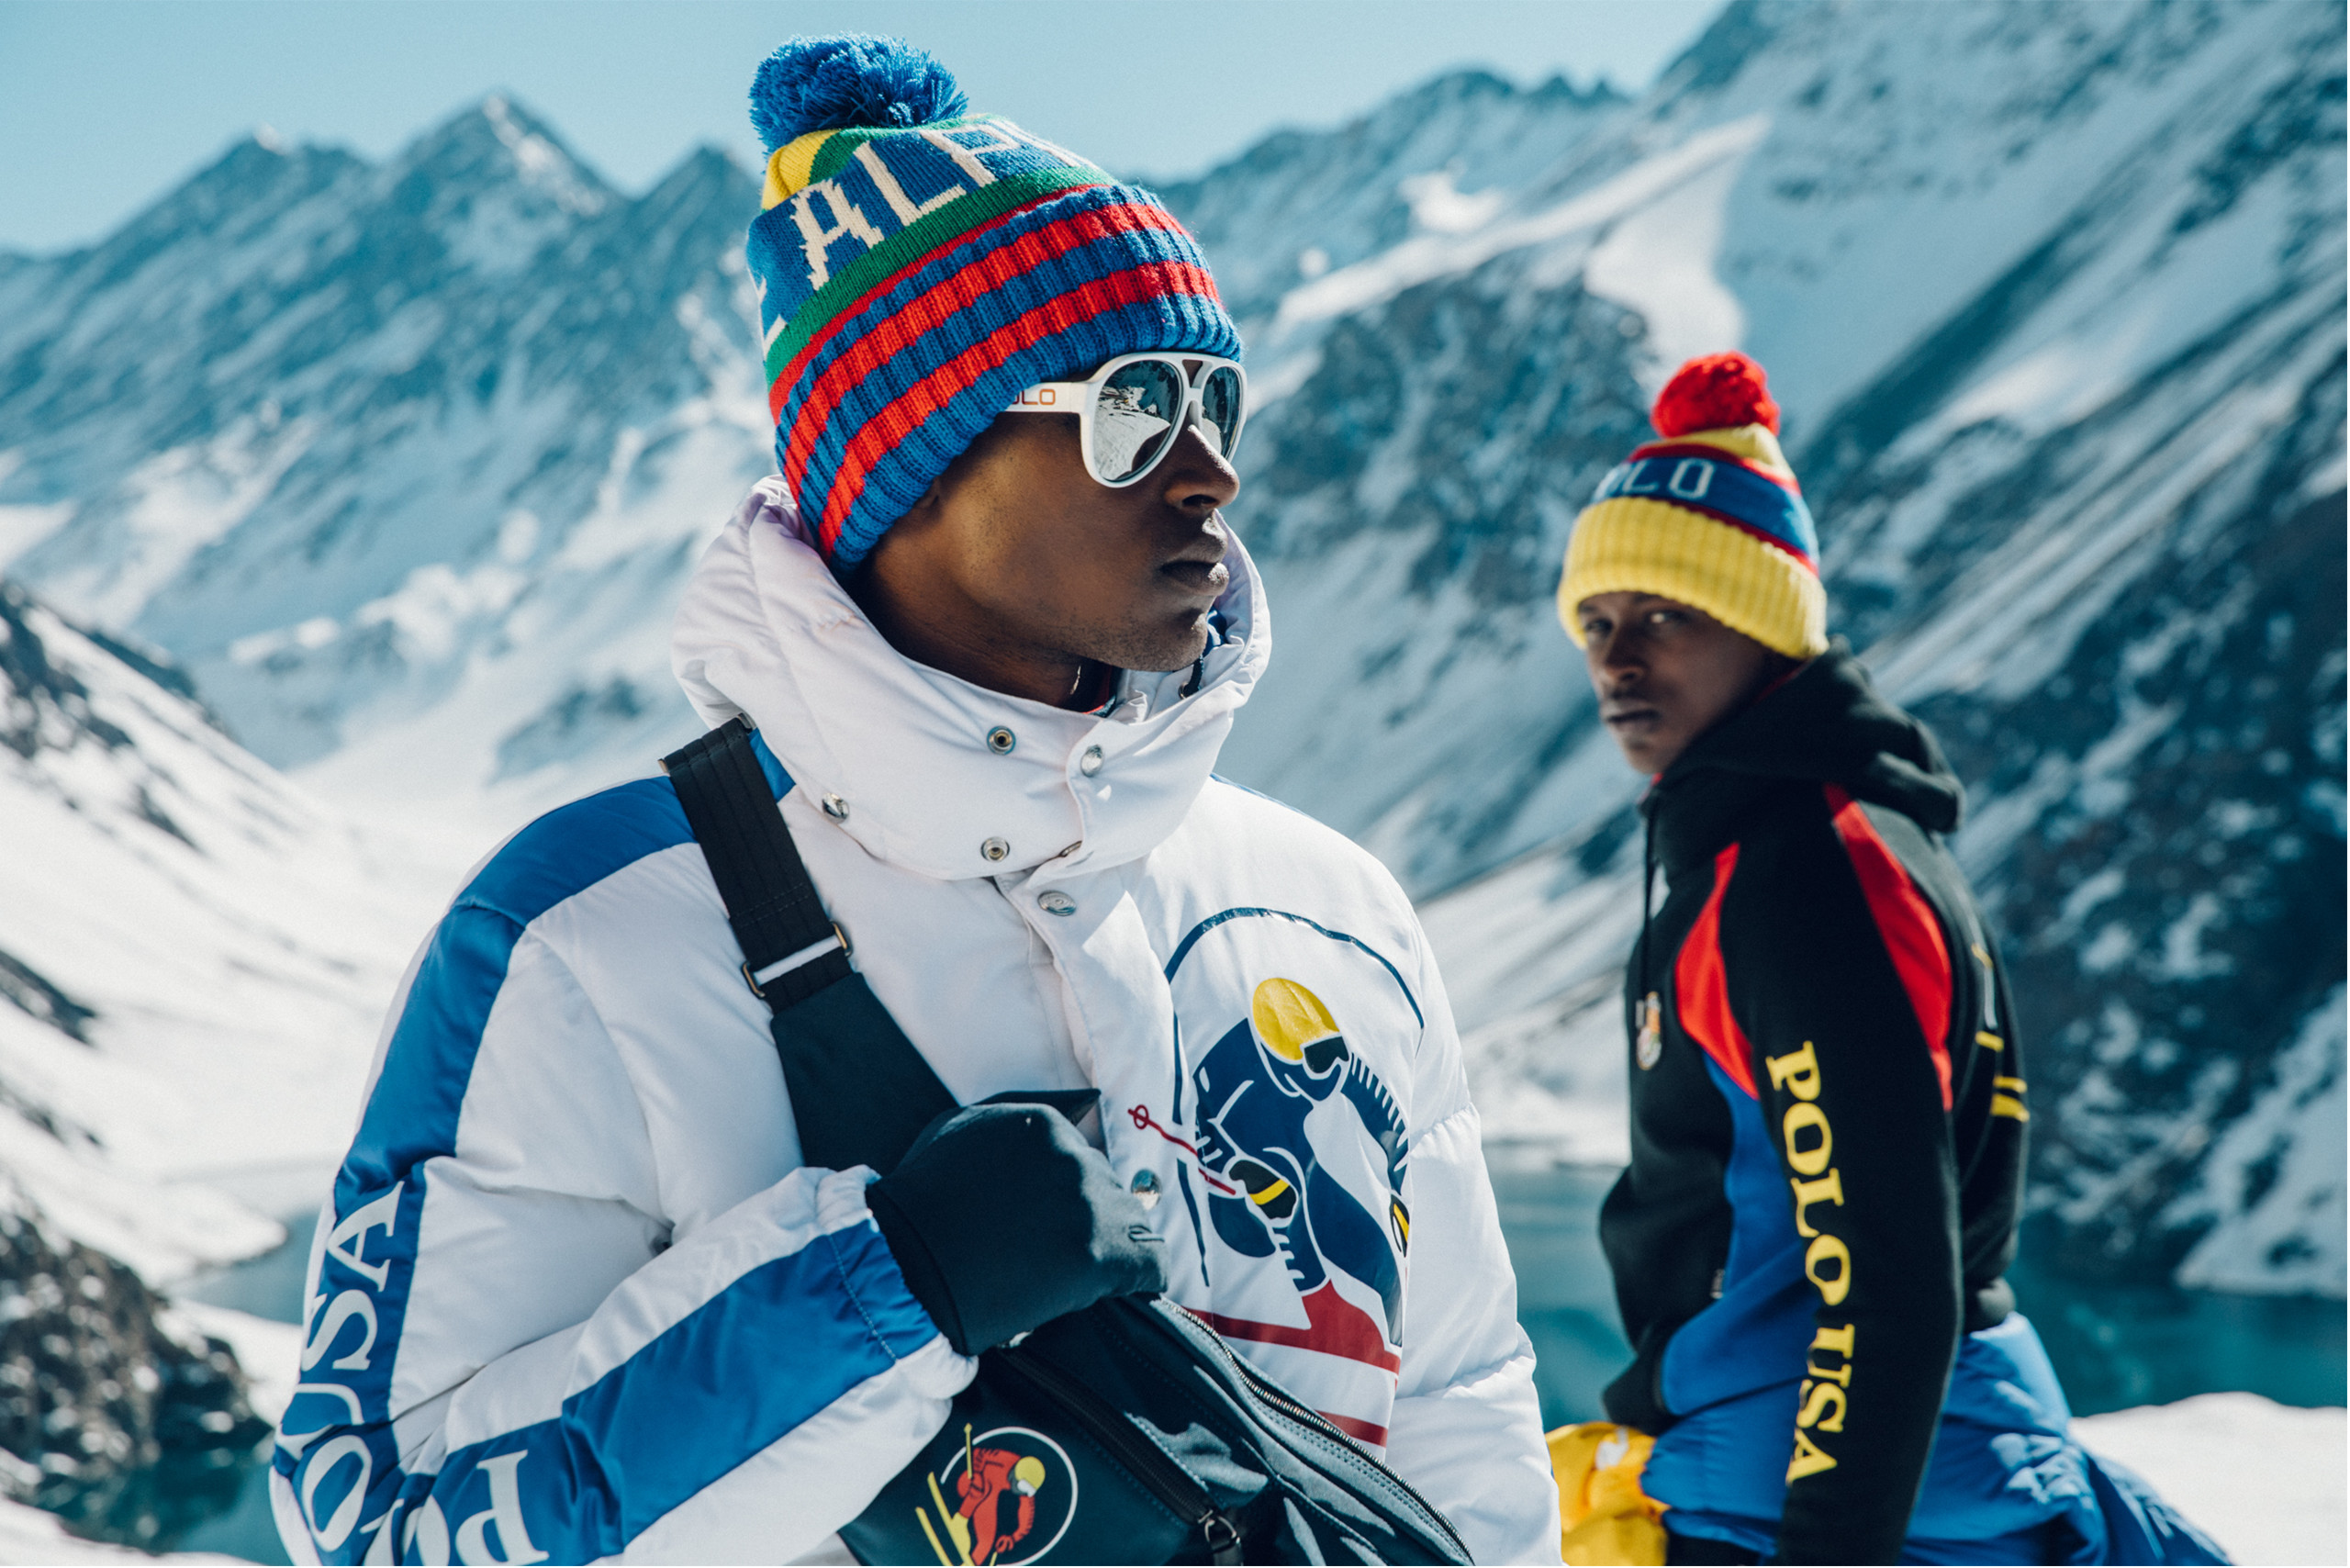 polo ralph lauren alpine ski jacket